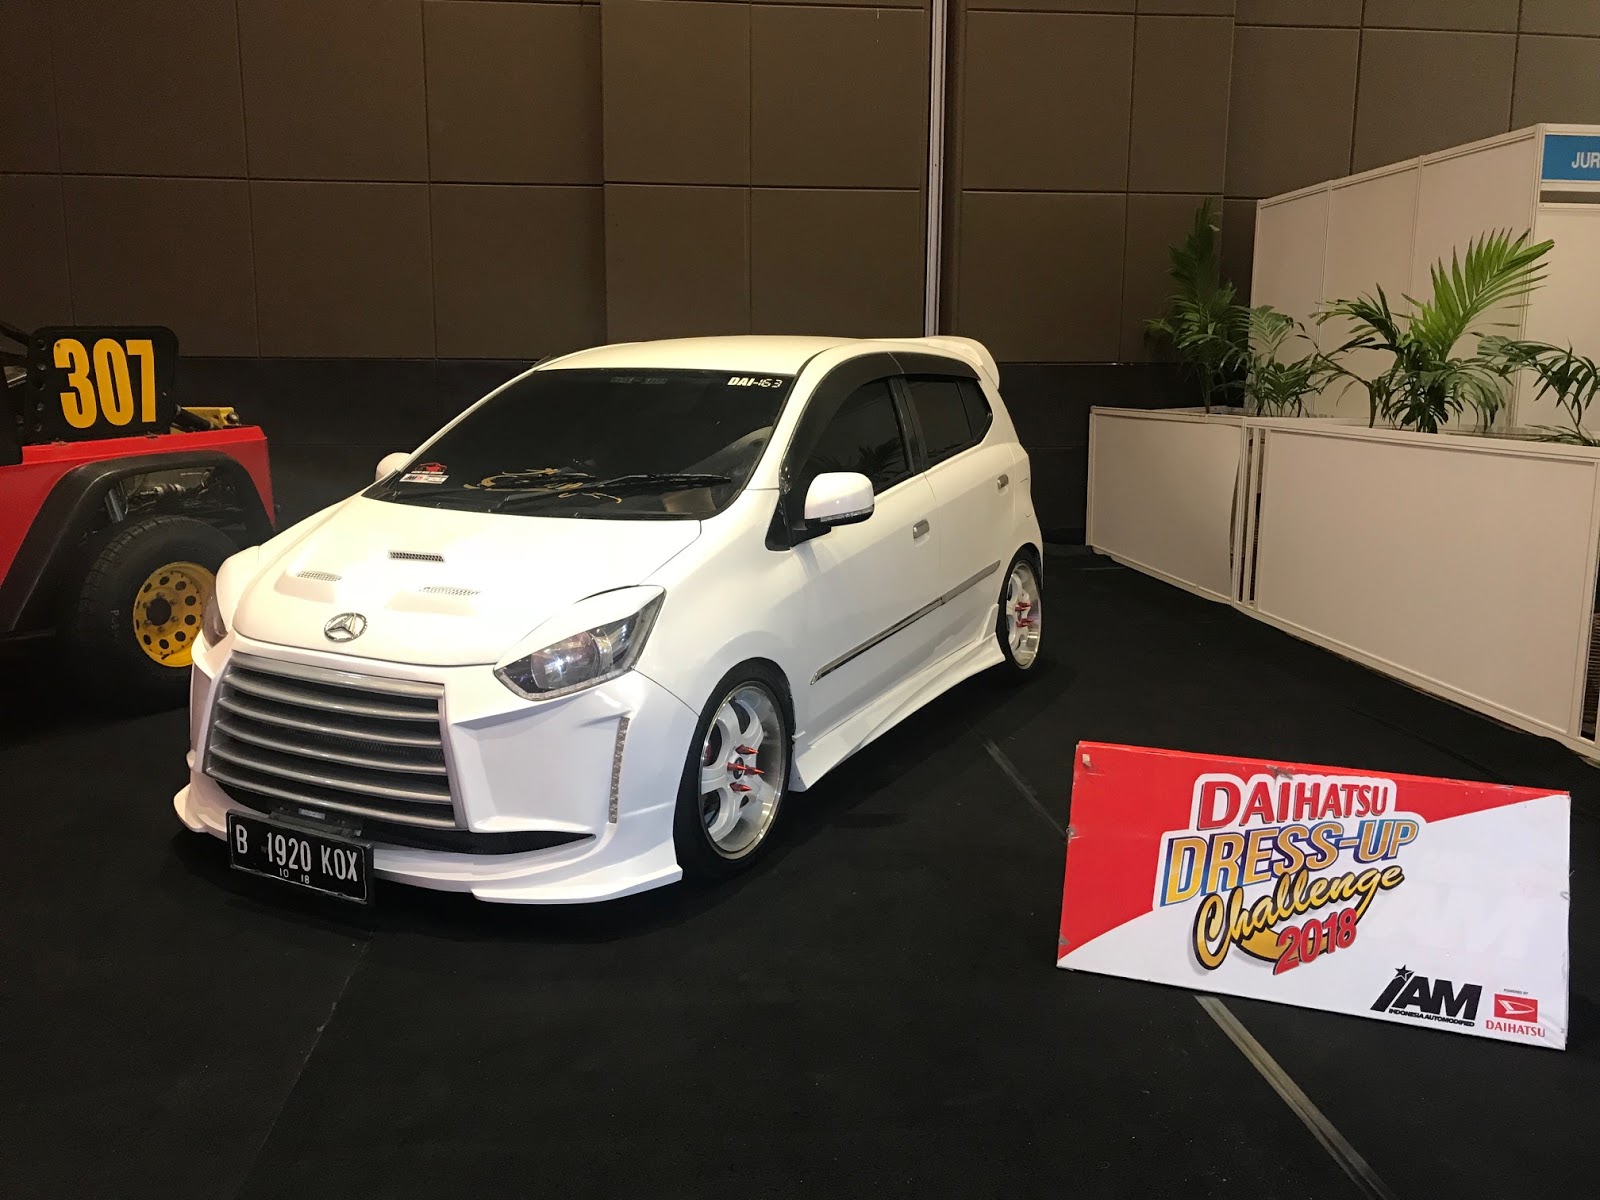 Ajang Modifikasi Daihatsu Dress Up Challenge Ramaikan IIMS 2018